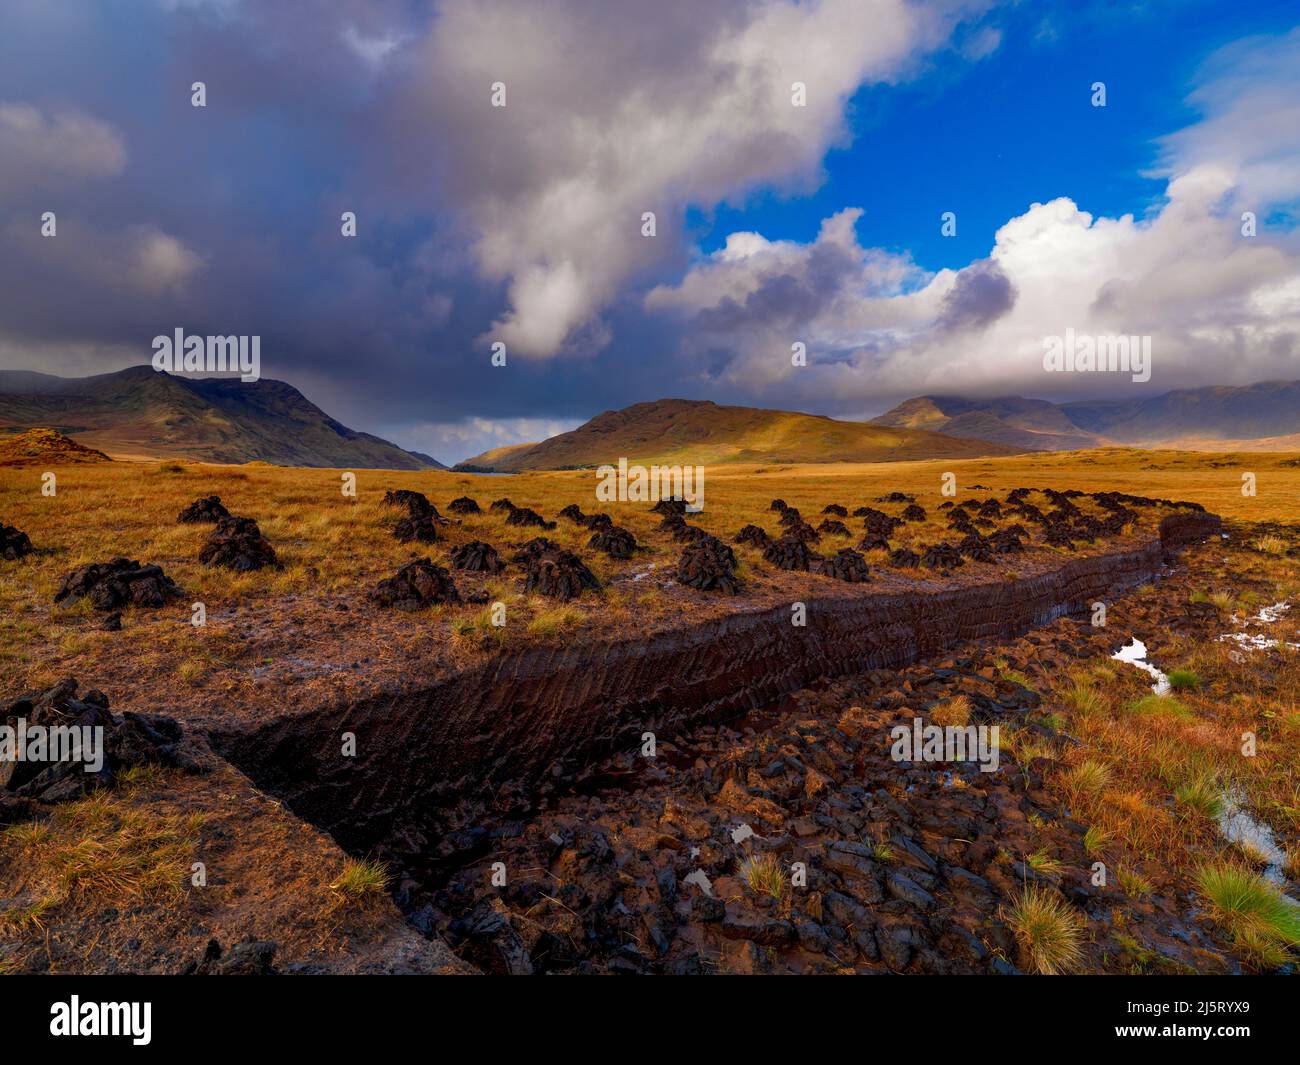 Peat, Turf cutting, looking towards Lough Fee, North Connemara, County Galway, Ireland Stock Photo